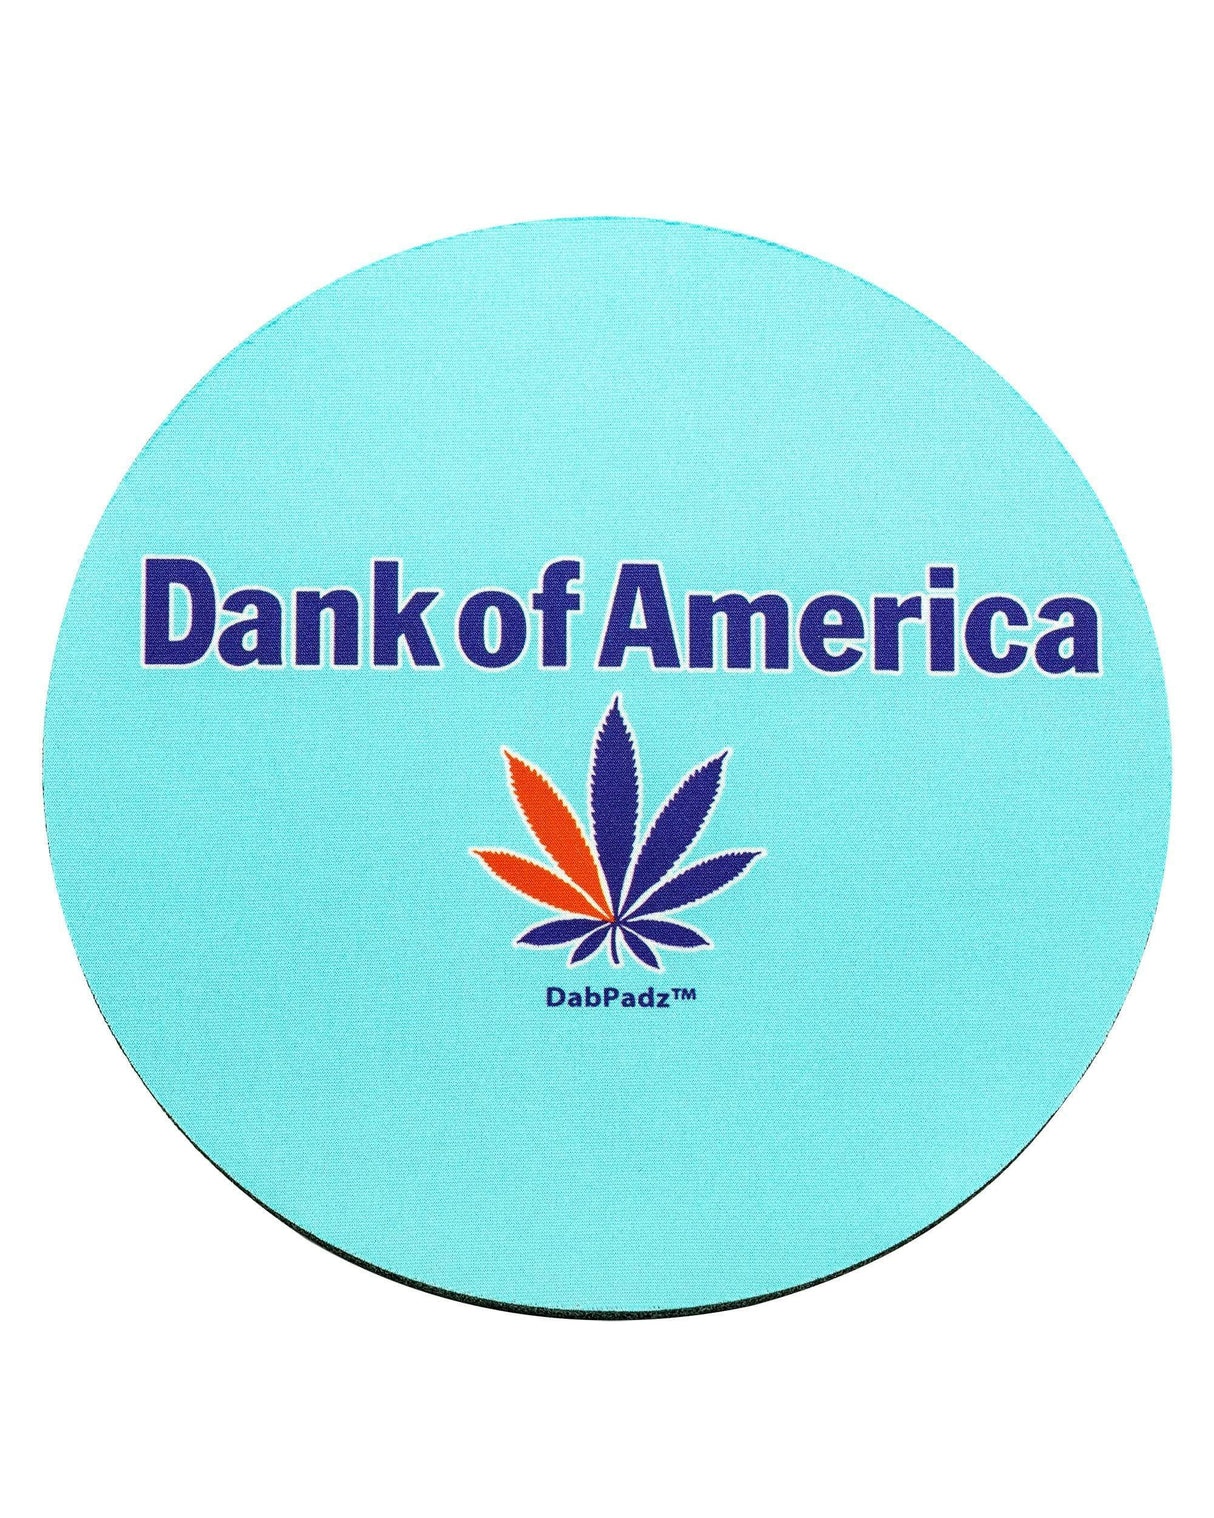 DabPadz 8" Rubber Dropmat with 'Dank of America' logo, top view on white background